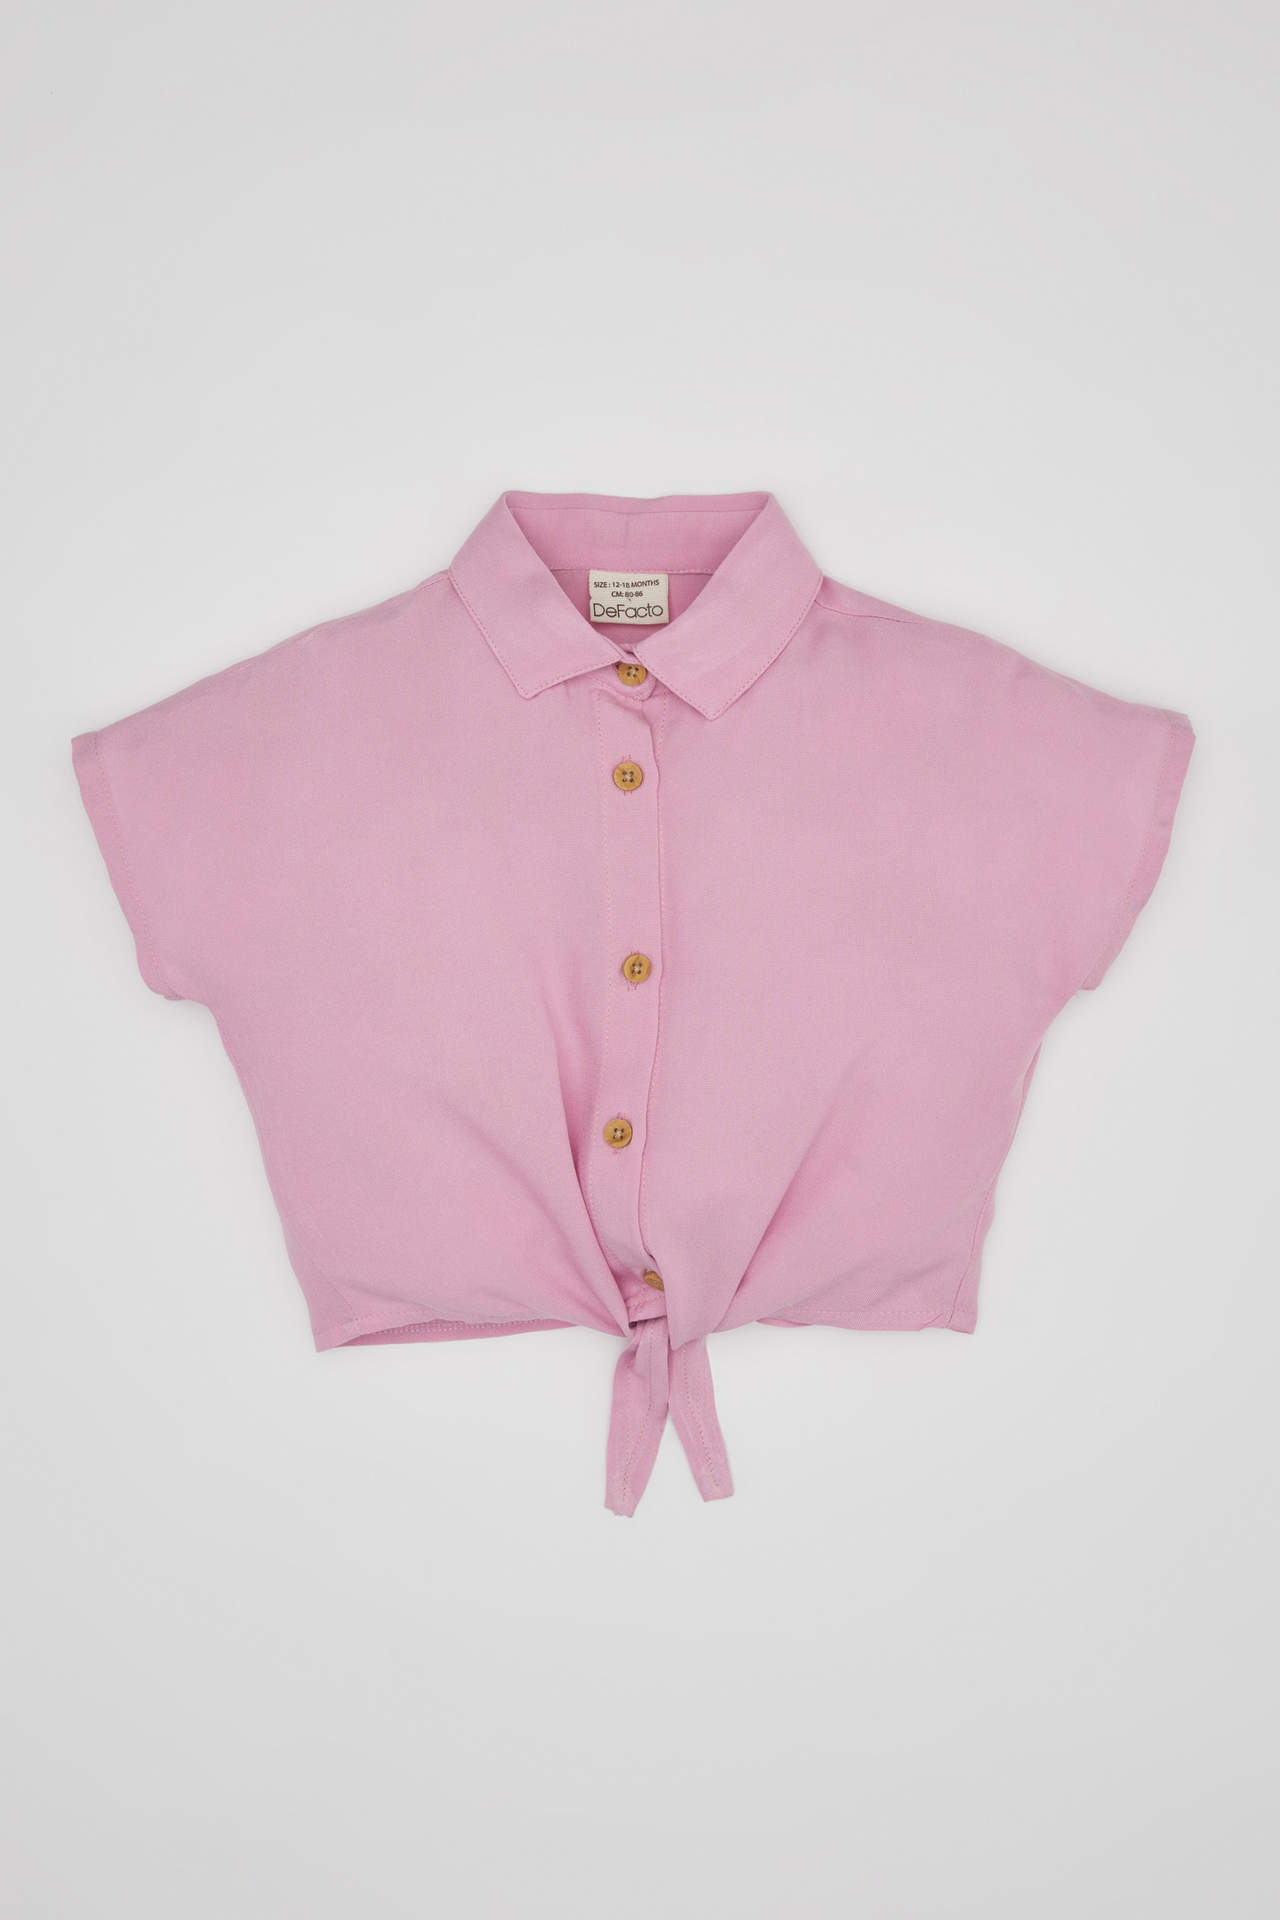 DEFACTO Baby Girl Shirt Collar Short Sleeve Shirt